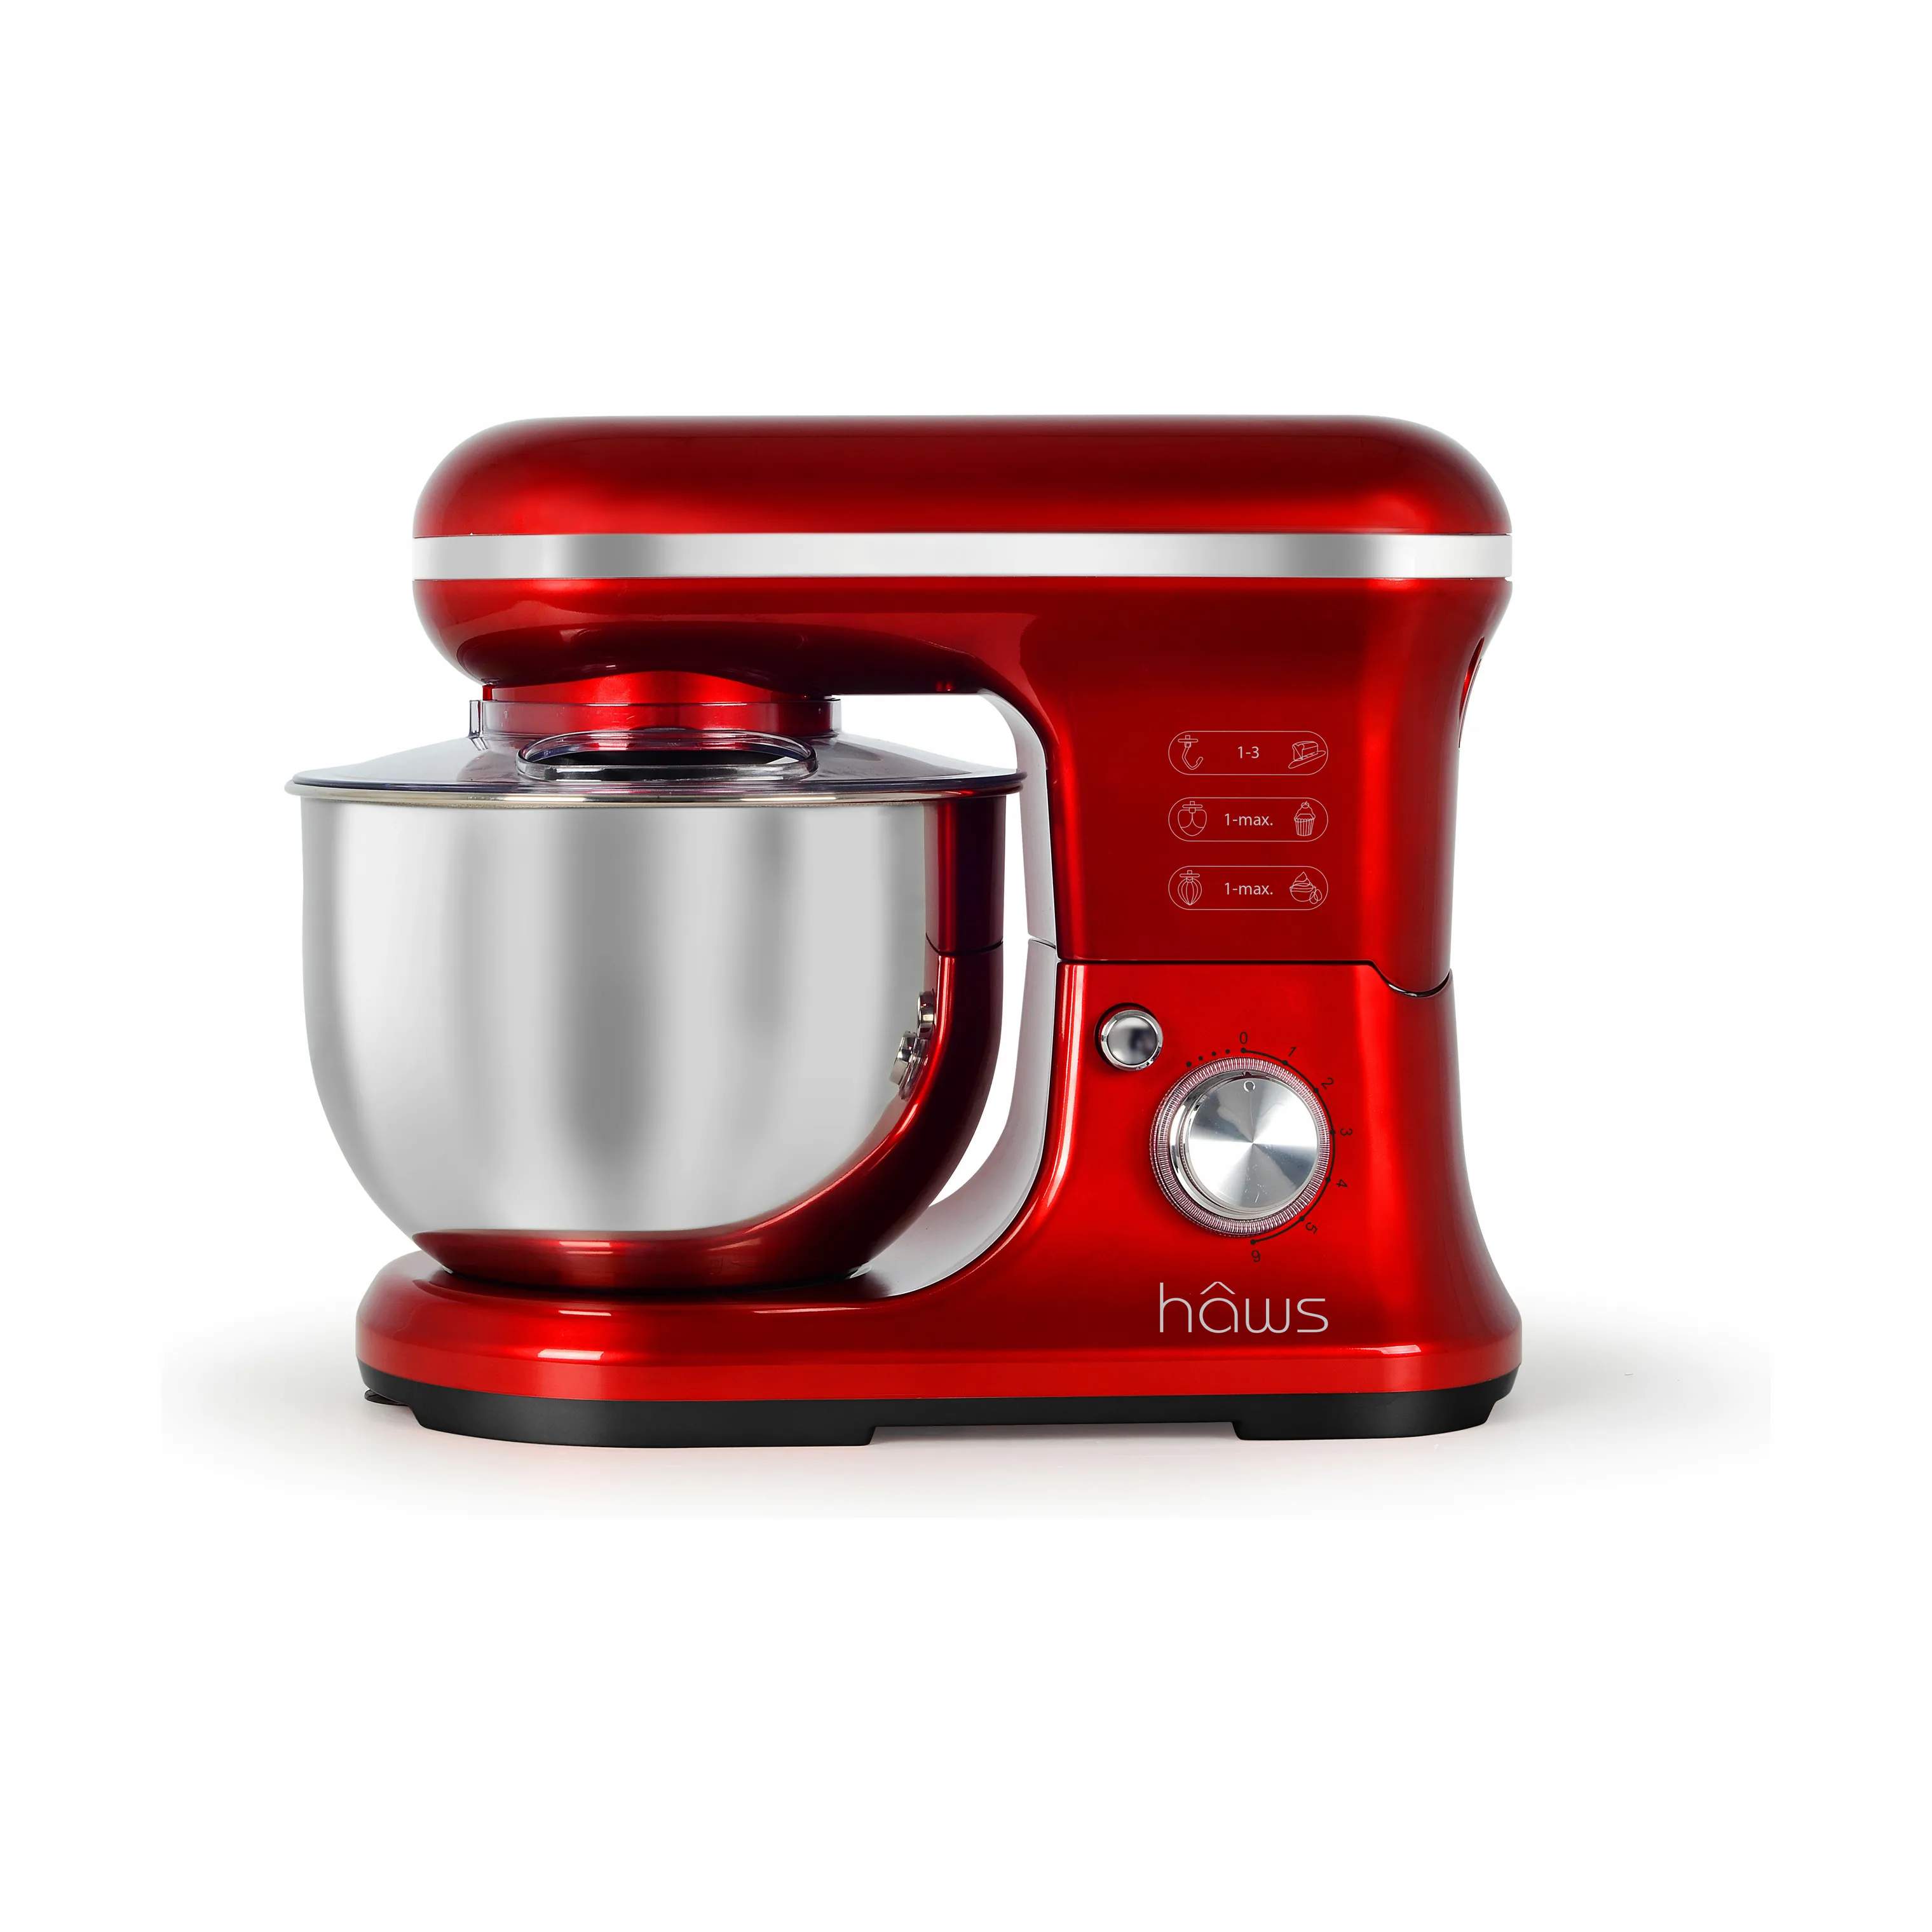 Køkkenmaskine 30-KM1200r, rød, large